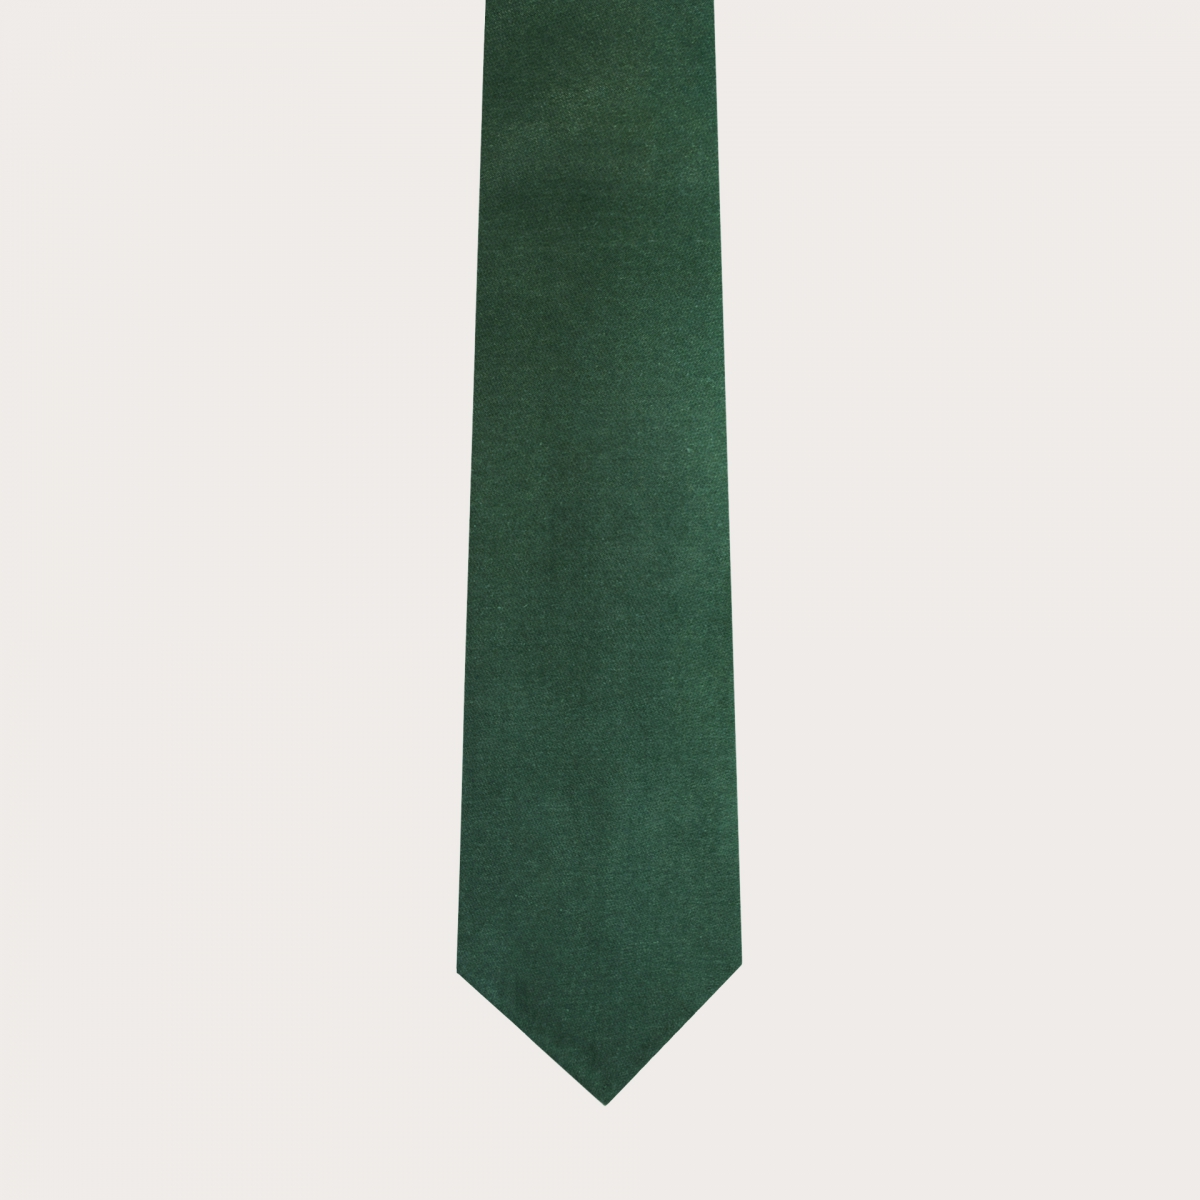 BRUCLE Ungefütterte Krawatte grun